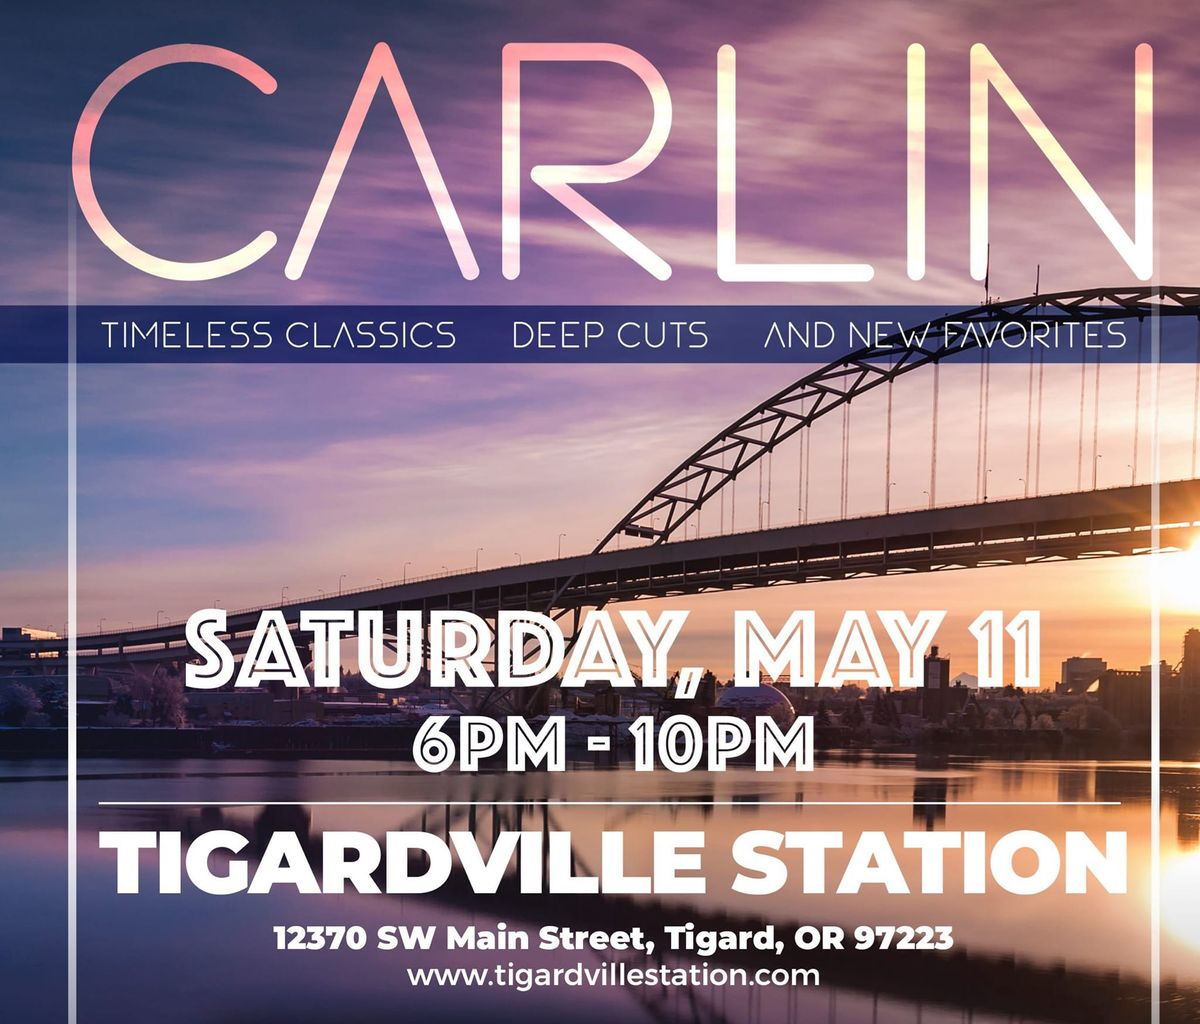 Carlin @ Tigardville Station